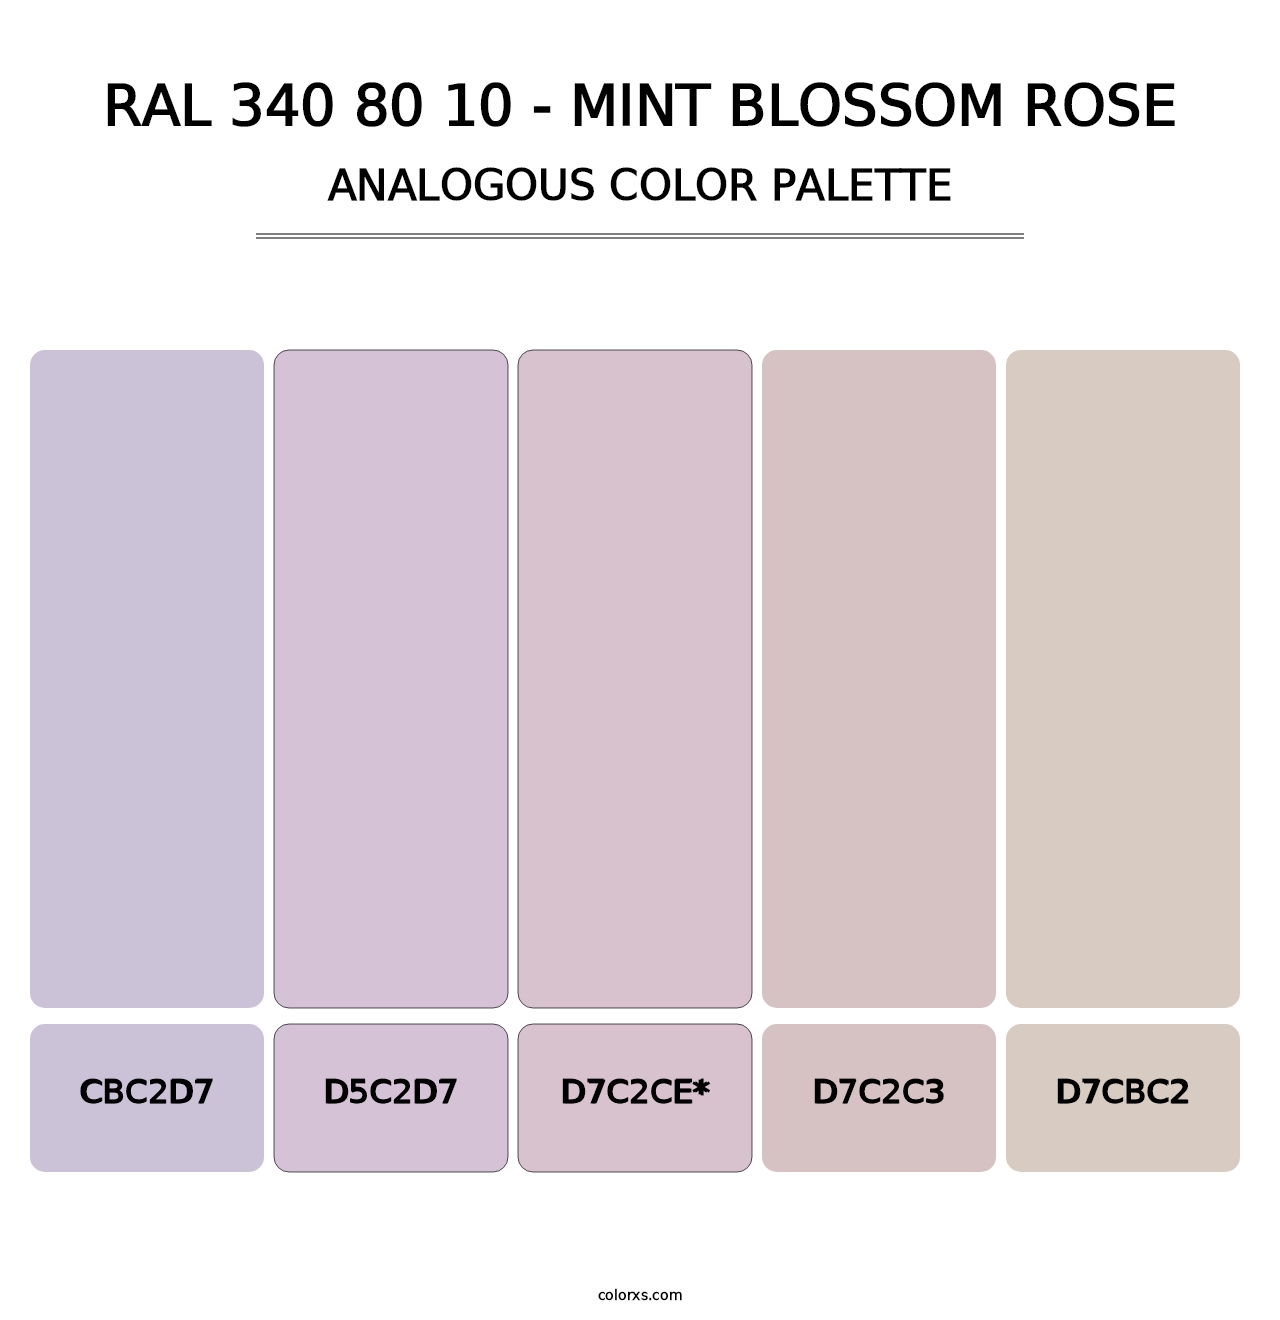 RAL 340 80 10 - Mint Blossom Rose - Analogous Color Palette